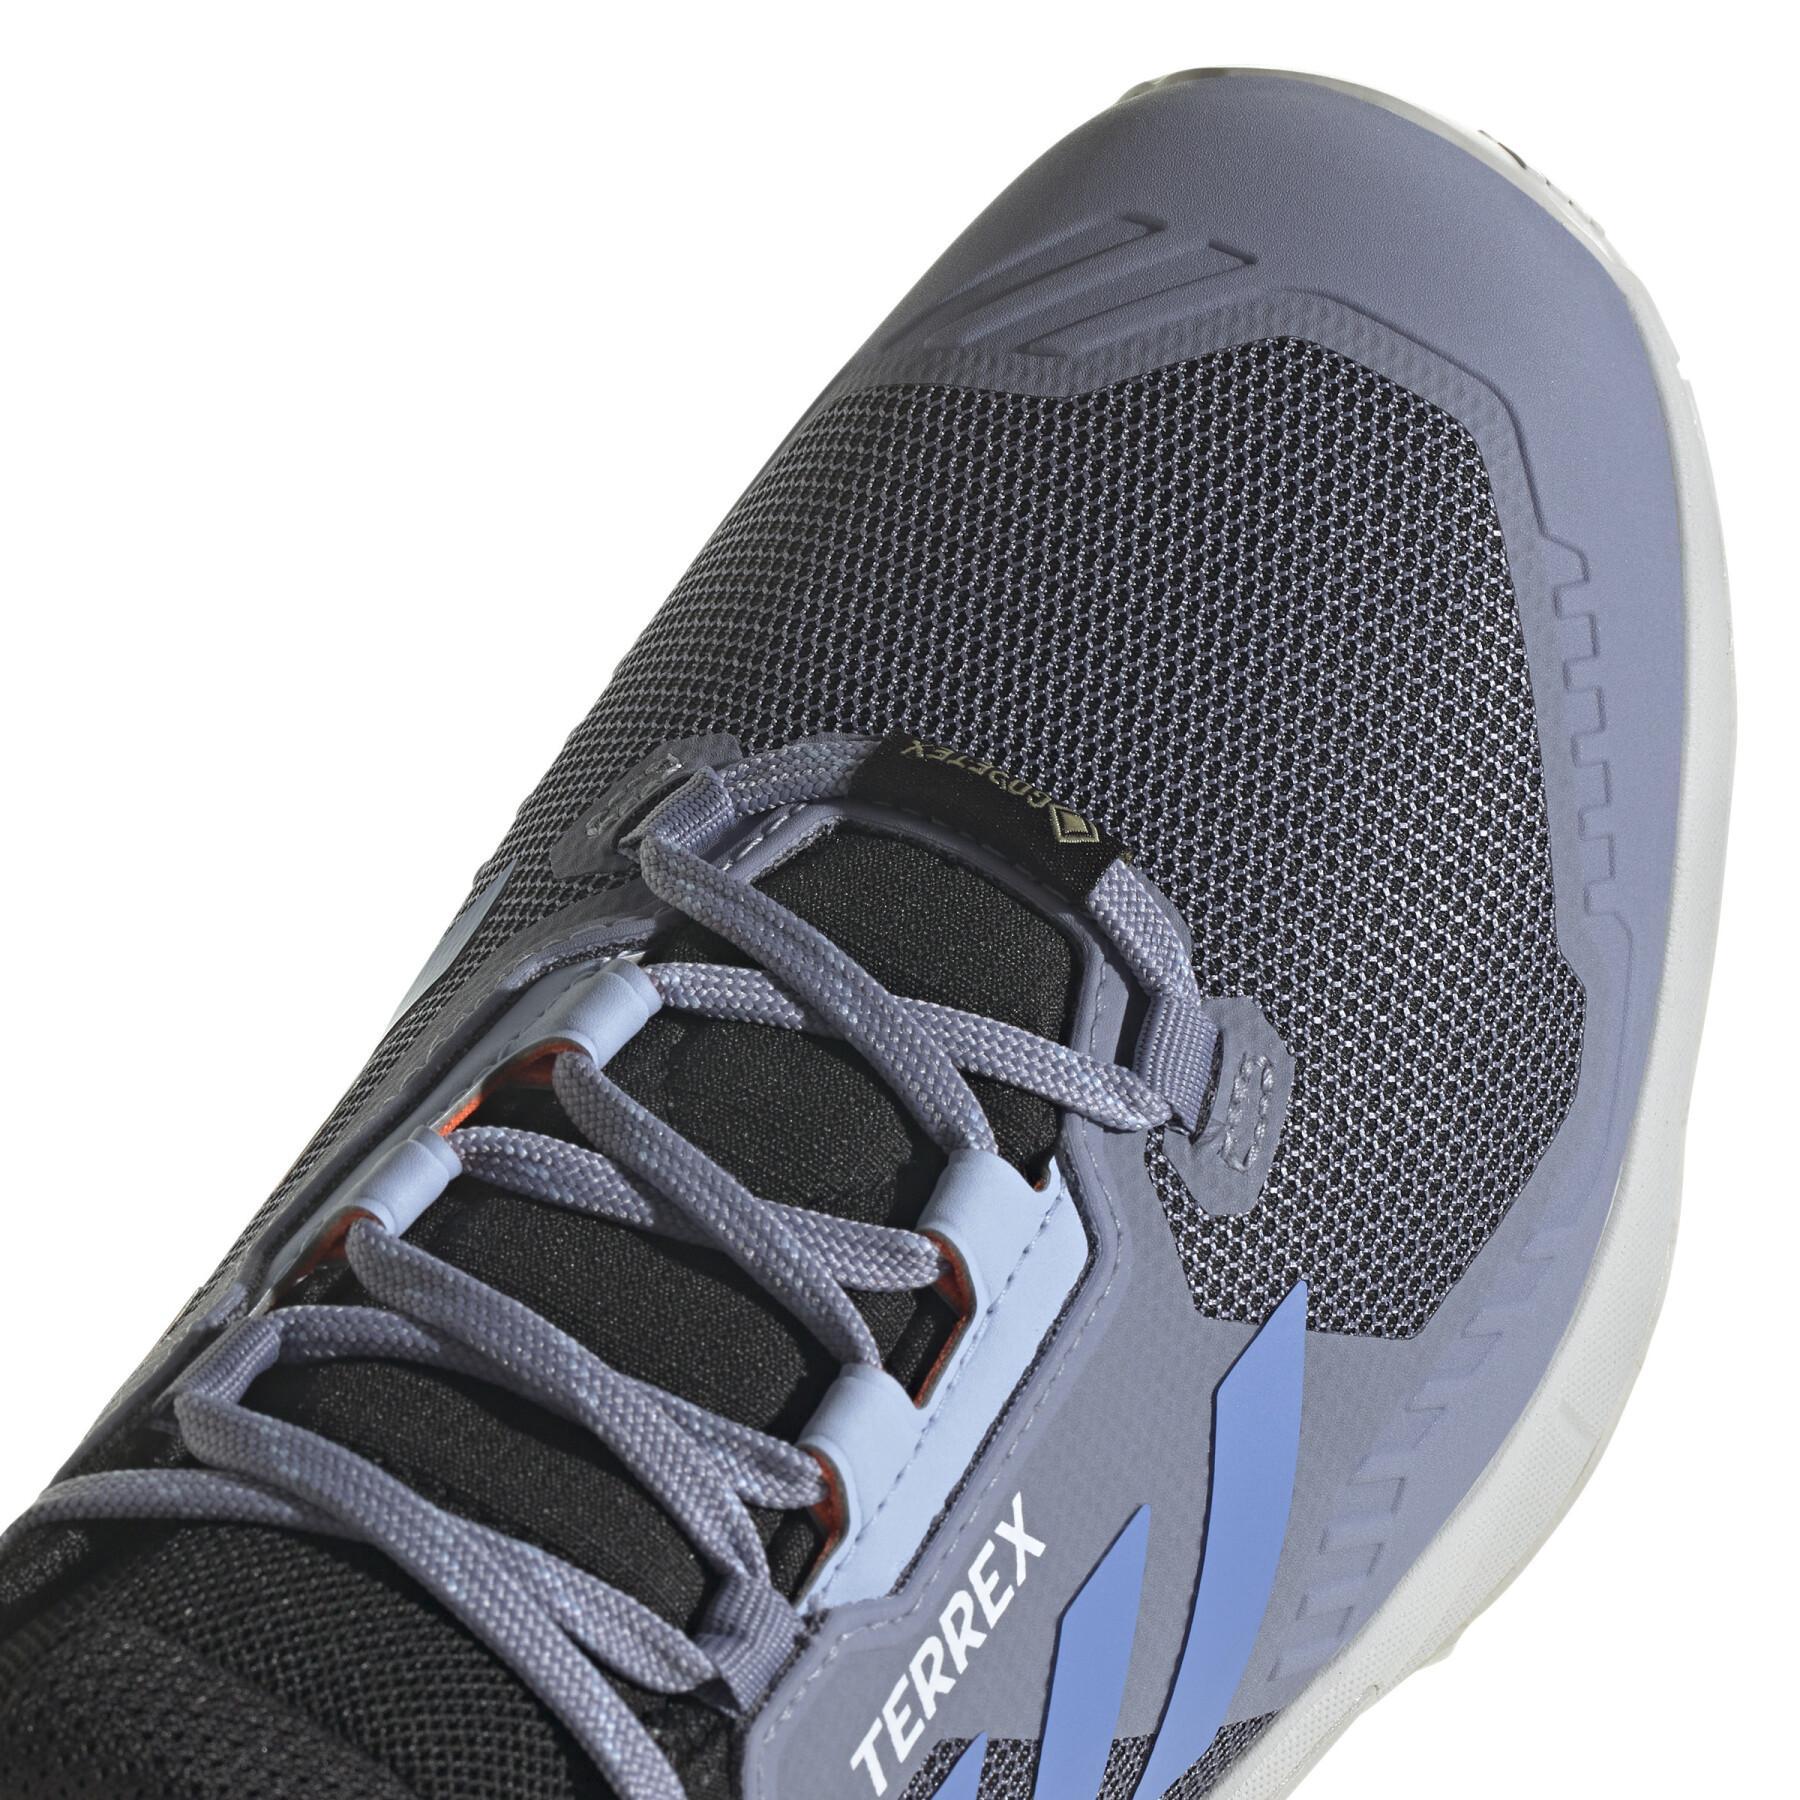 Chaussures de randonnée adidas Terrex Swift R3 GORE-TEX